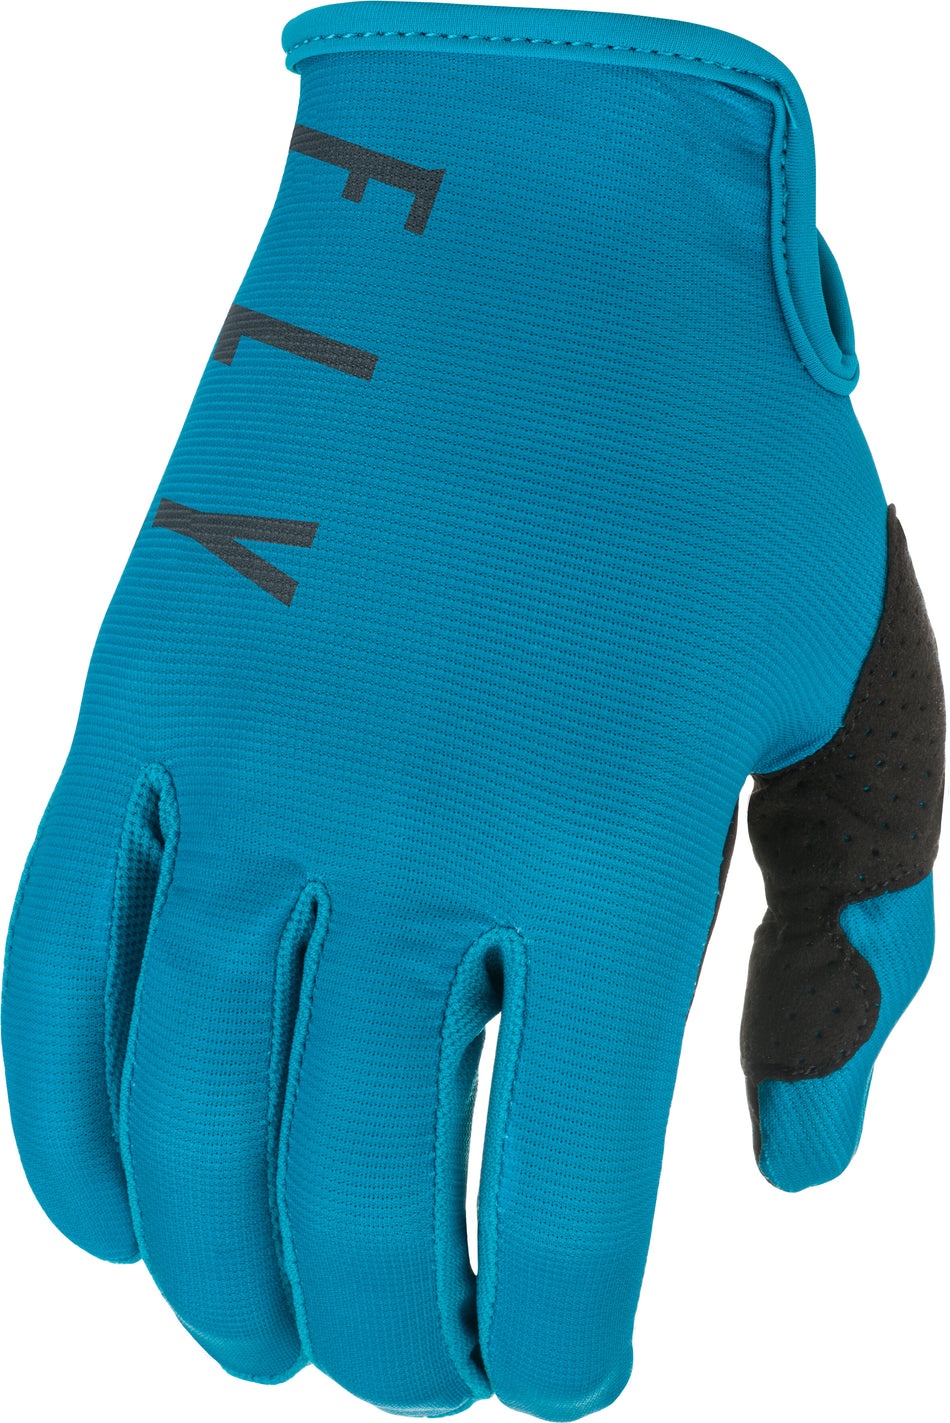 FLY RACING Lite Gloves Blue/Grey Sz 09 374-71109